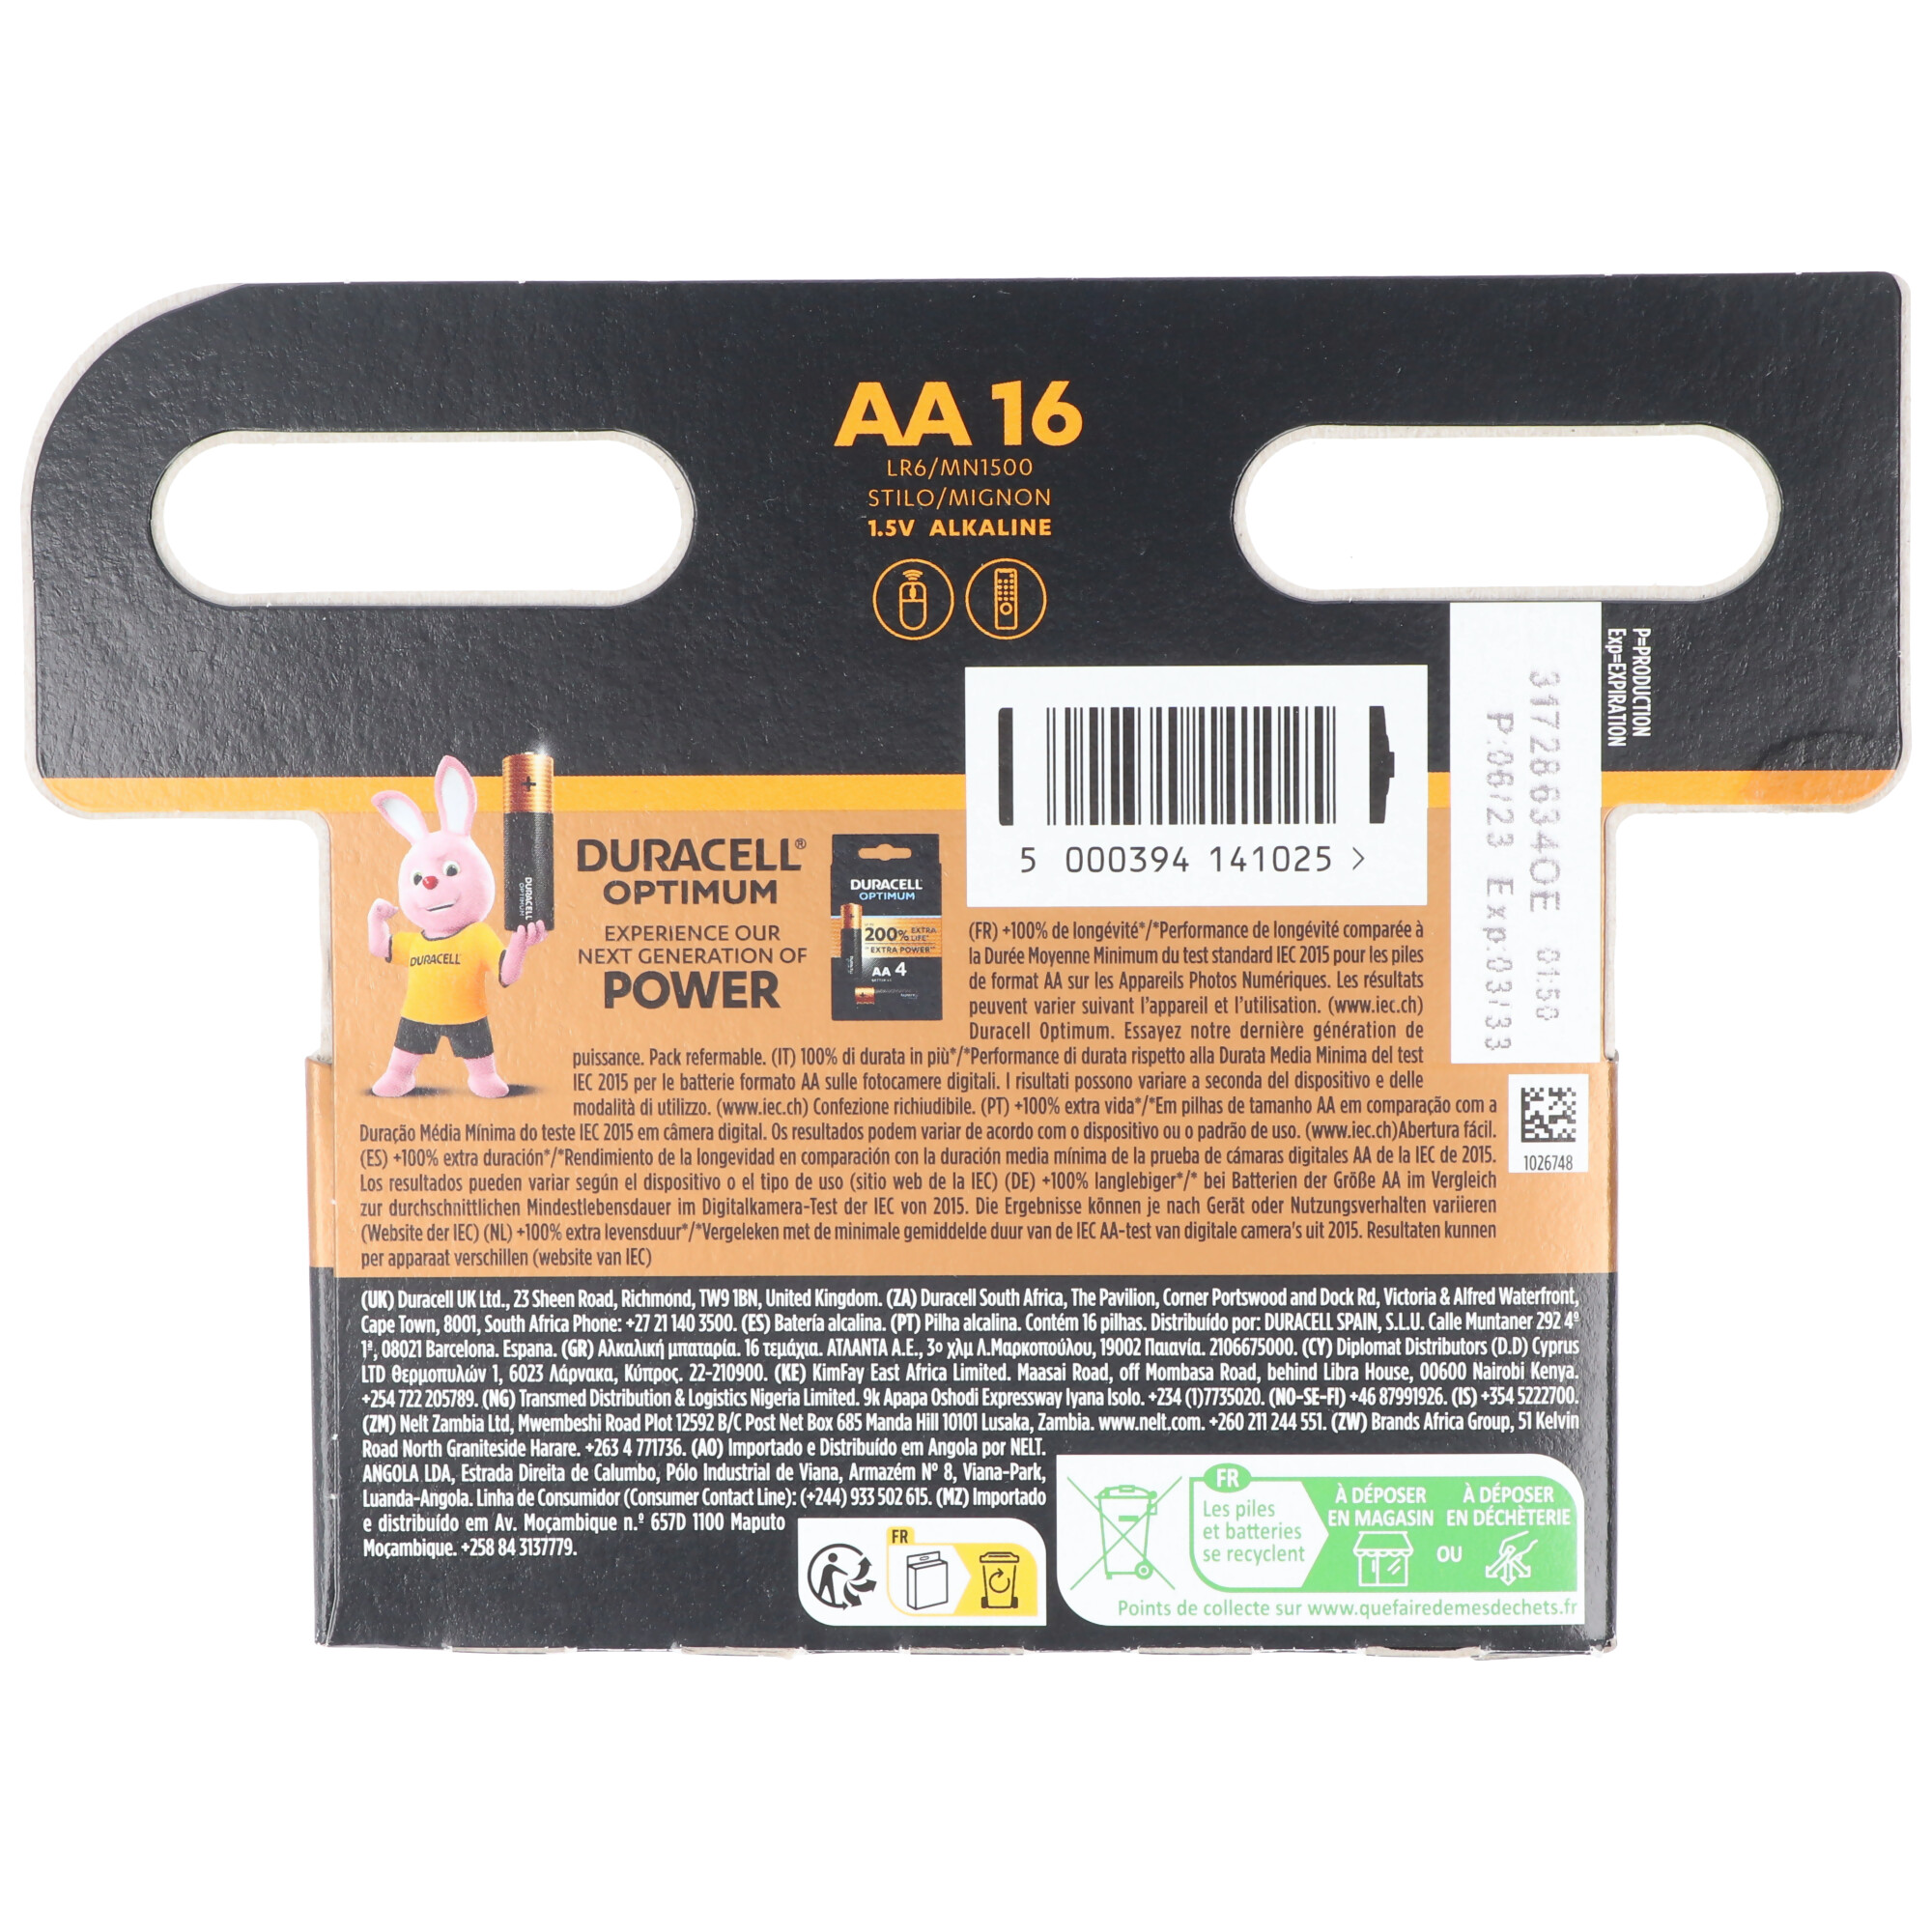 Duracell Batterie Alkaline, Mignon, AA, LR06, 1.5V Plus, Extra Life, Retail Blister (16-Pack)